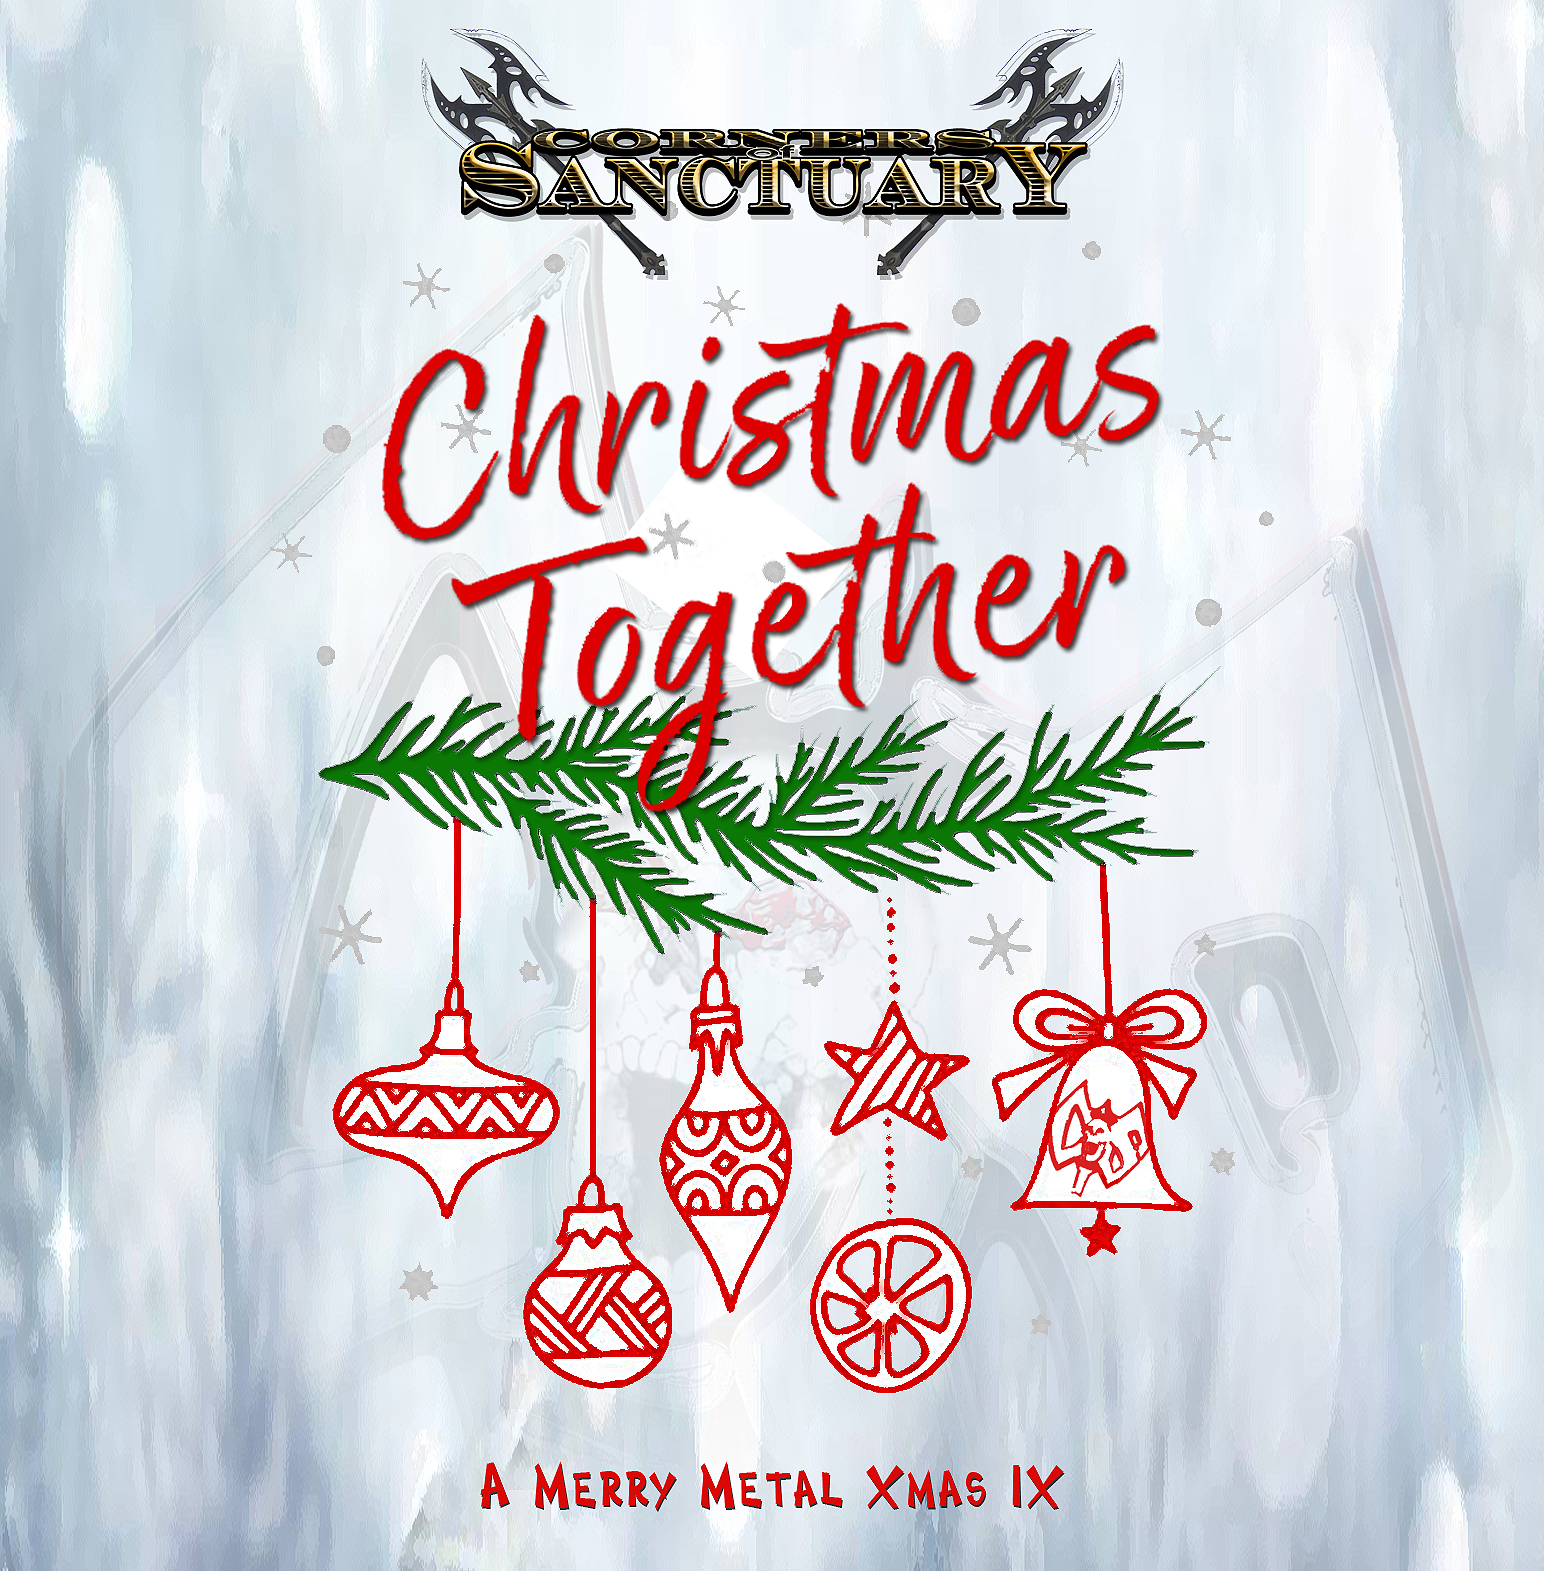 Corners of Sanctuary Christmas Together a Merry Metal Xmas IX artwork